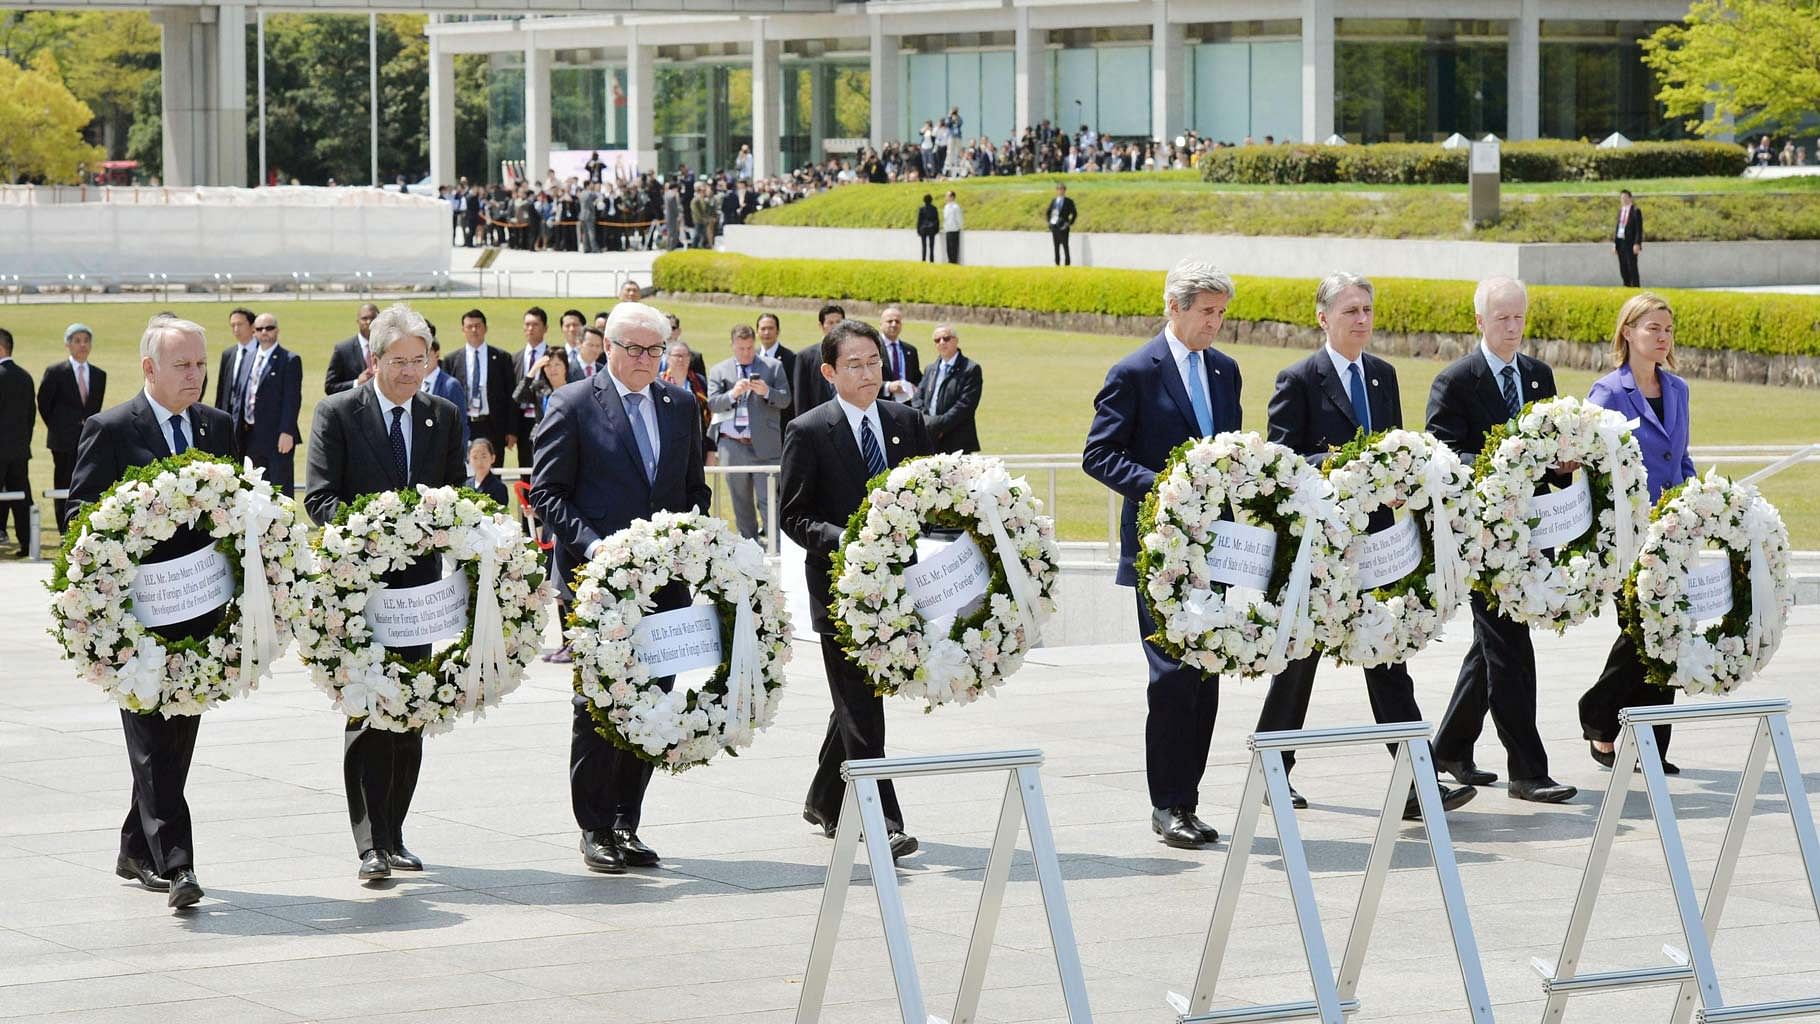 The World G7 leader at the Hiroshima memorial on Monday, 11 April 2016. (Photo: AP)